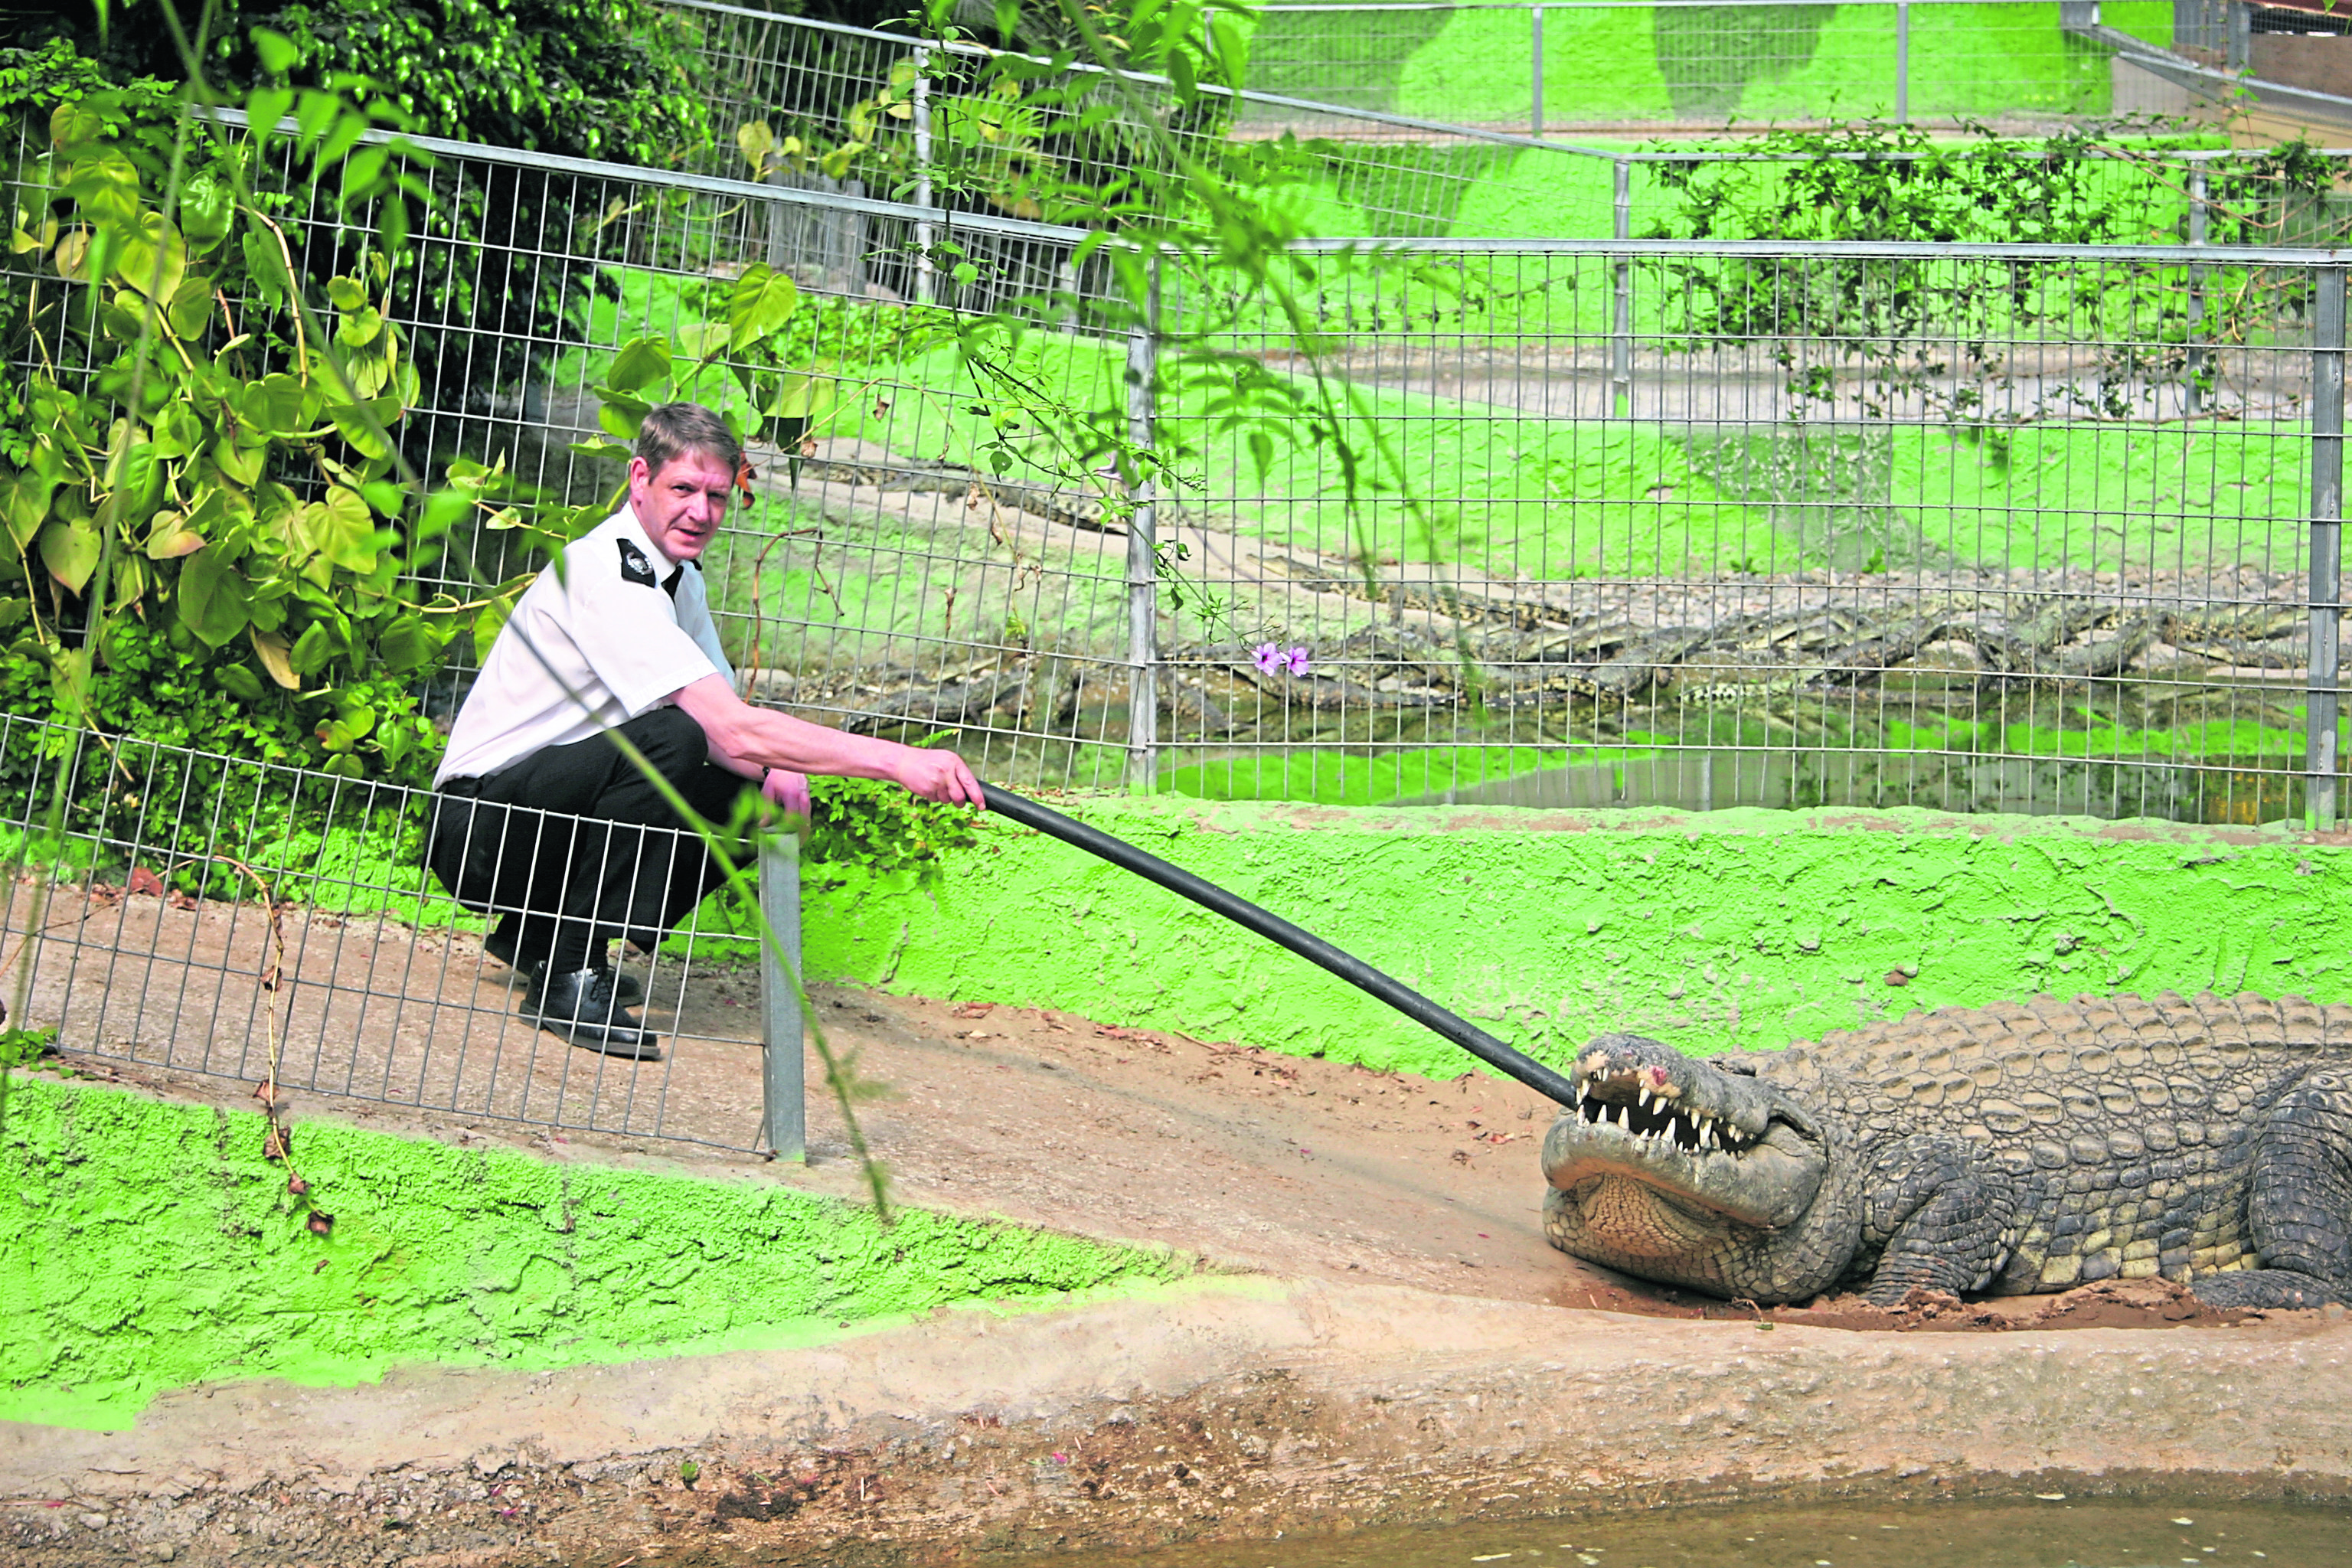 SSPCA chief supt Mike Flynn with Big Daddy, Europe’s biggest crocodile, at Torremolinos animal park